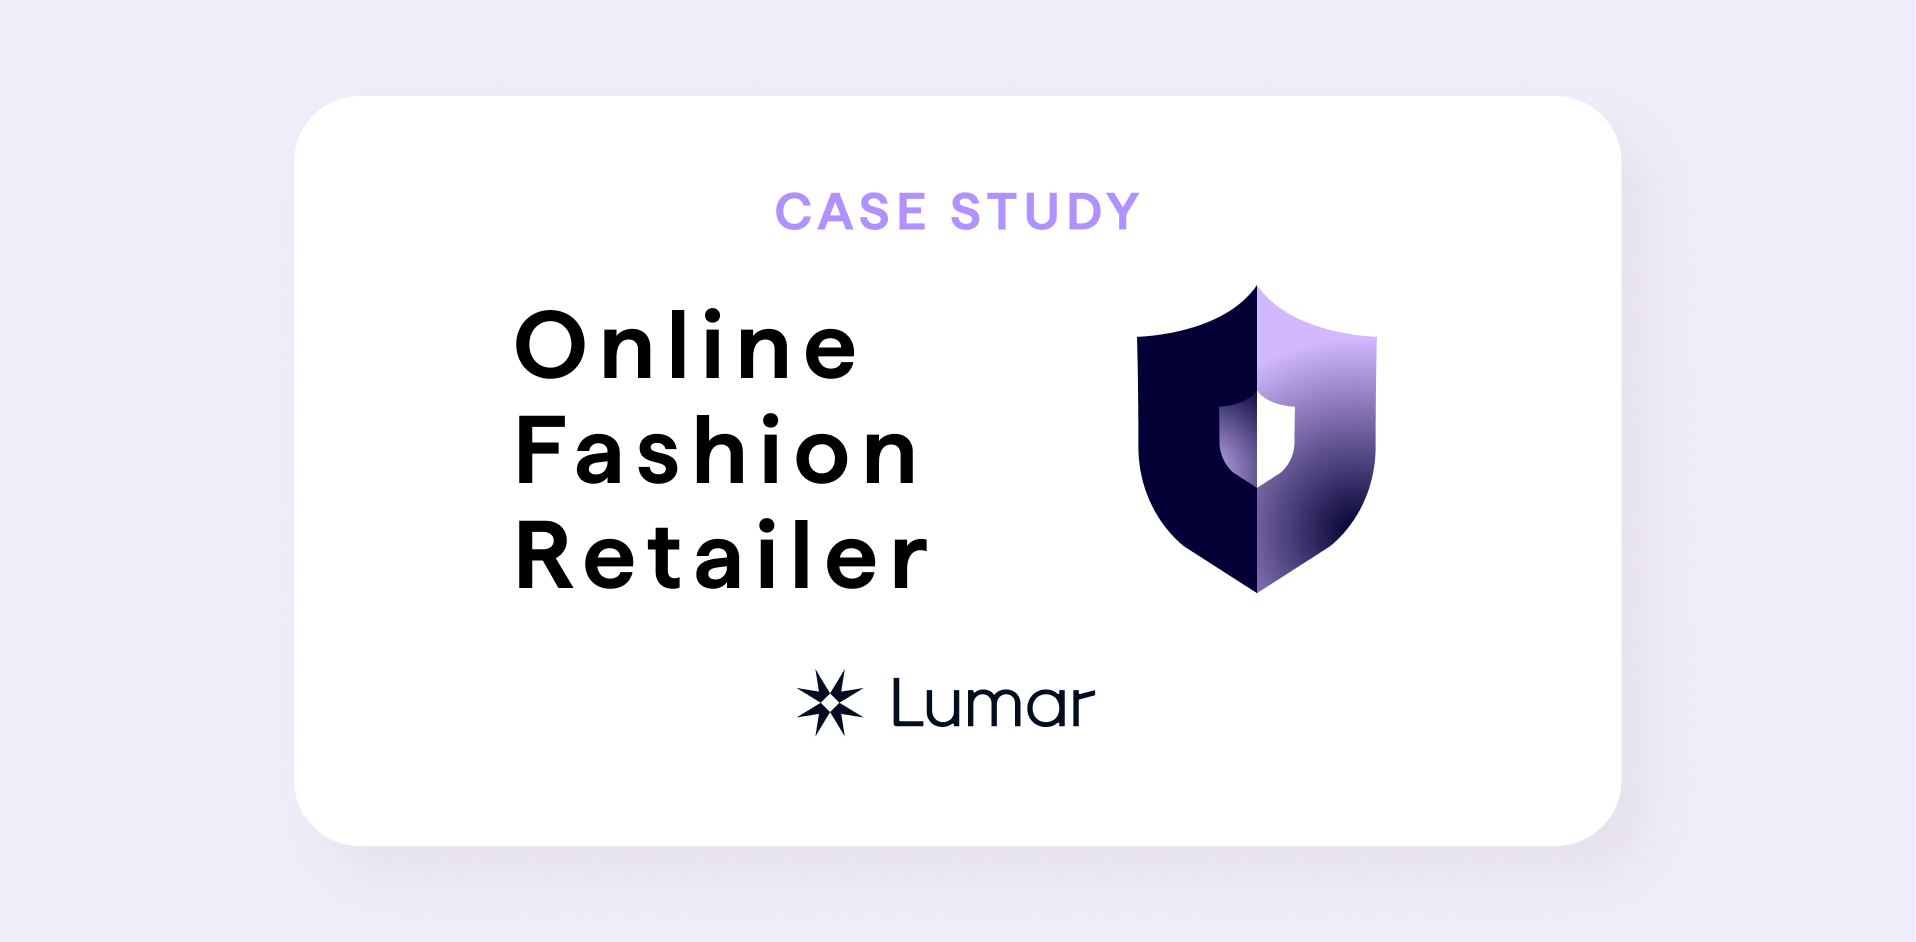 Case study header image for online fashion retailer